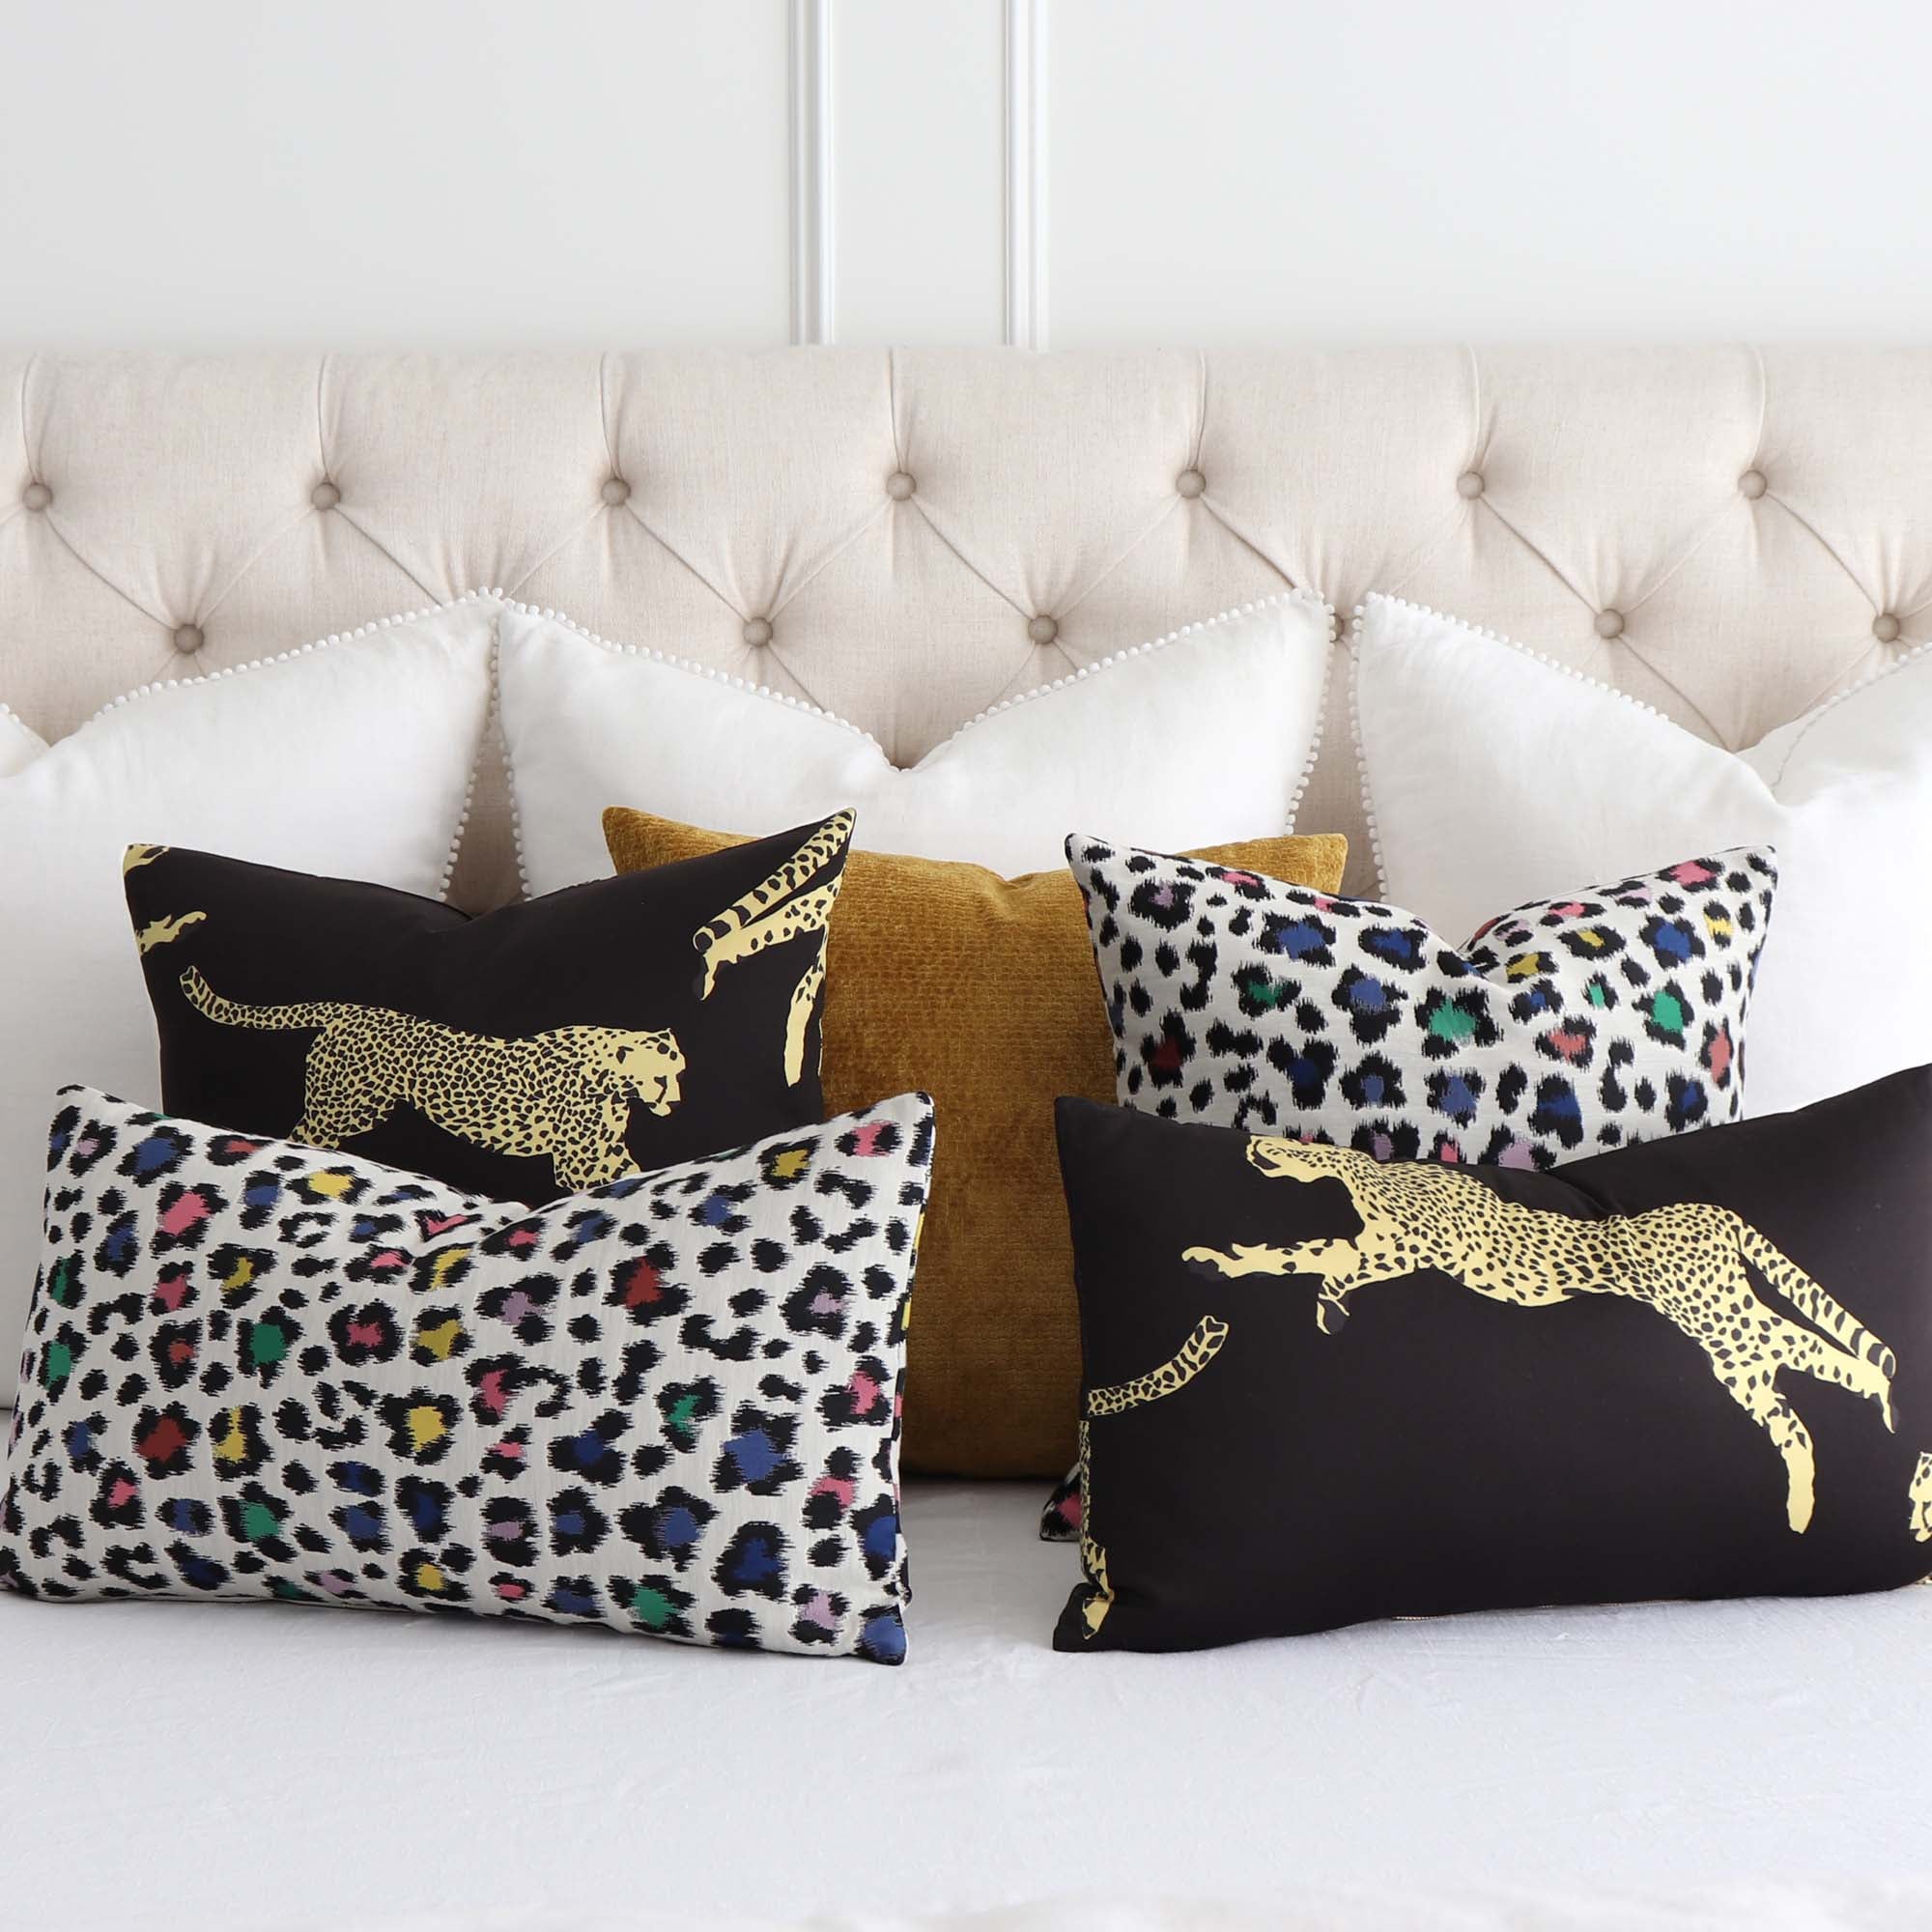 Scalamandre Leaping Cheetah Black Magic Designer Decorative Throw Pillow Cover with Matching Throw Pillows